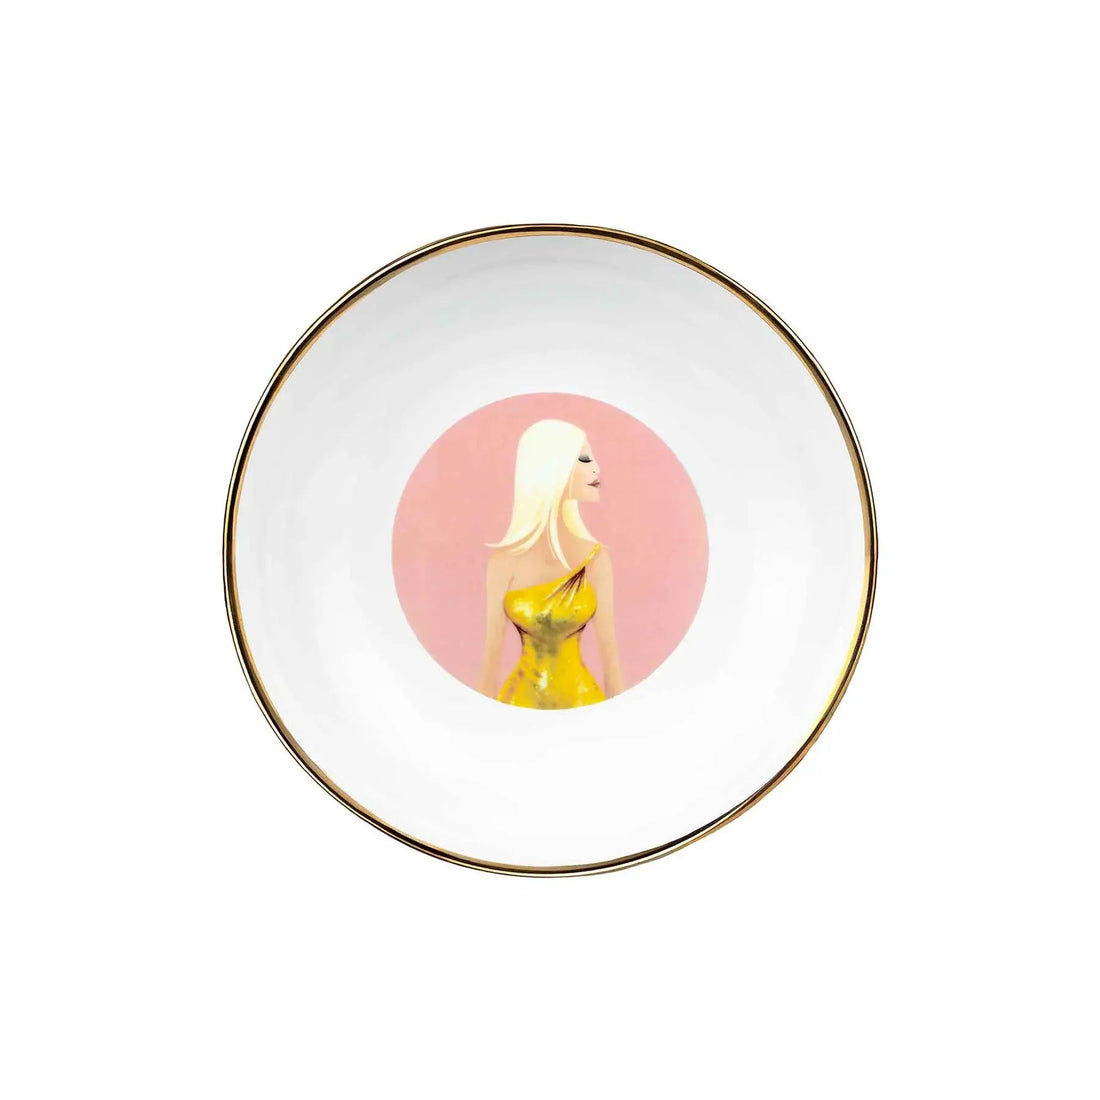 Donatella 2022 plate - Who Icons - 21 cm dessert plate